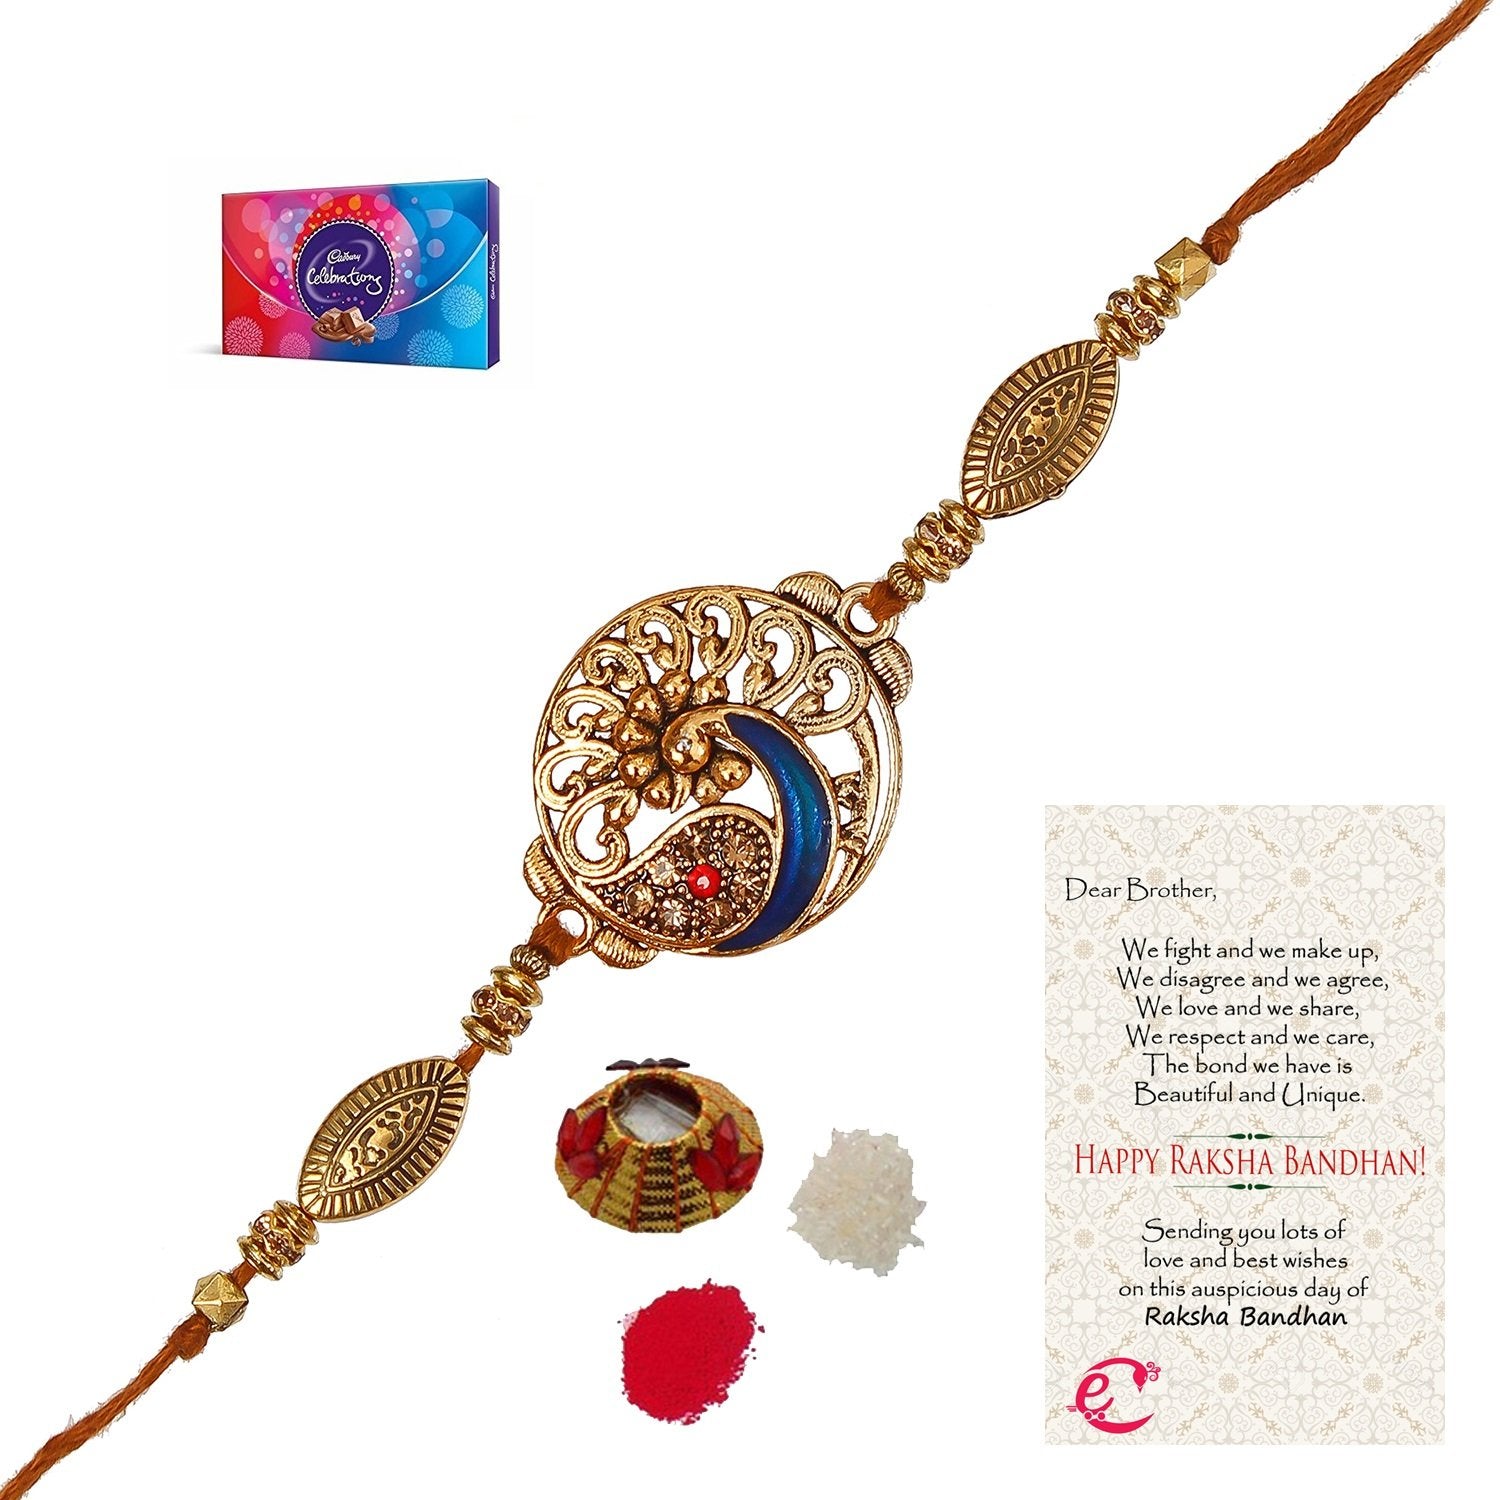 Designer Peacock Rakhi with Cadbury Celebrations Gift Pack of 7 Assorted Chocolates and Roli Tikka Matki, Best Wishes Greeting Card